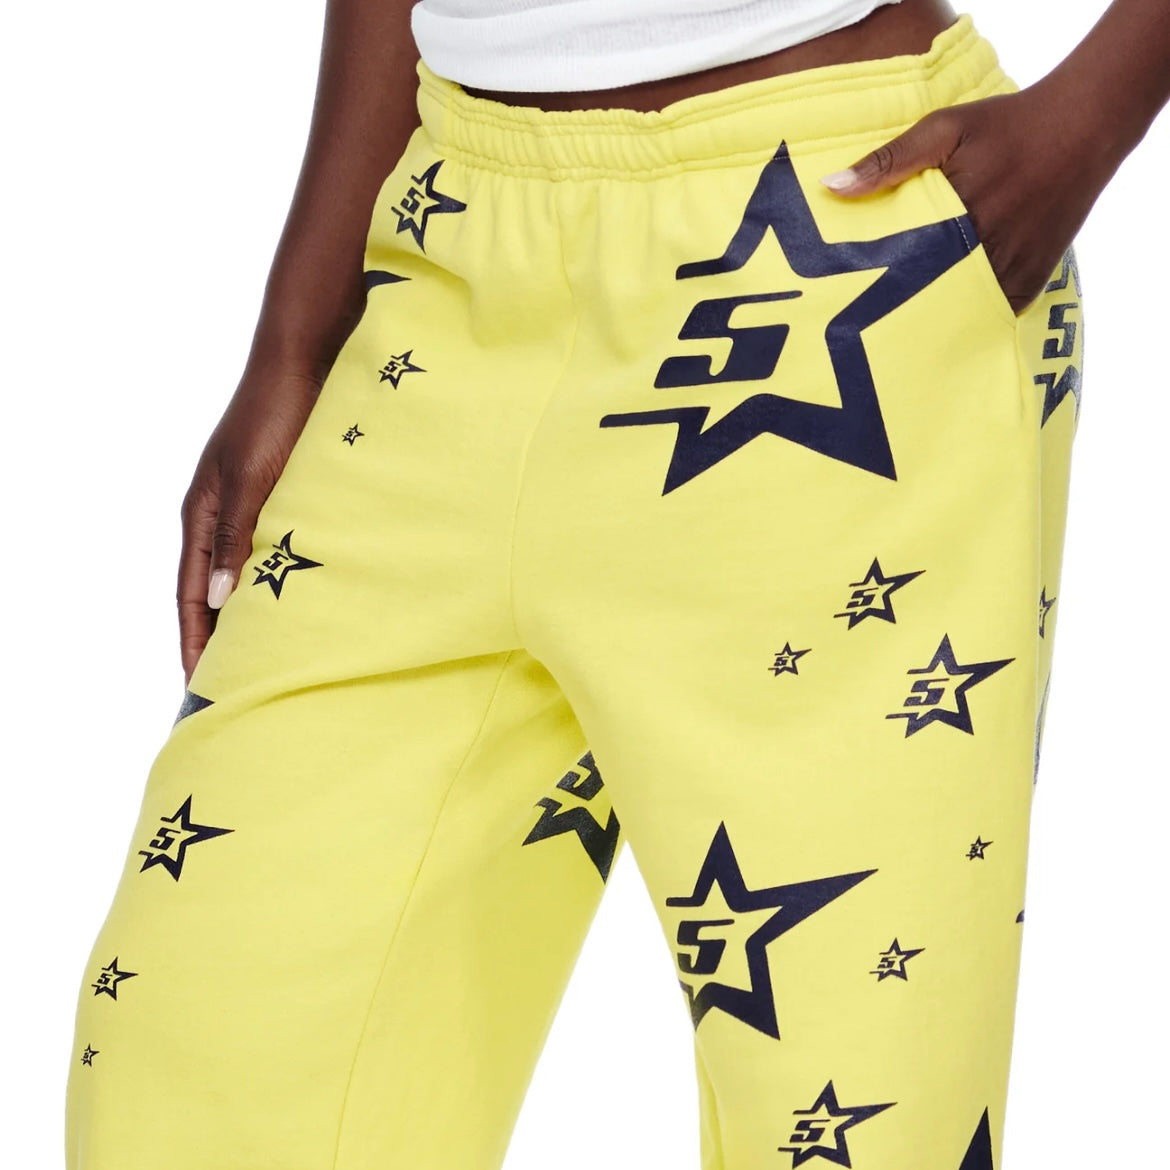 Sp5der Yellow 5Star Sweatpants On Body 1